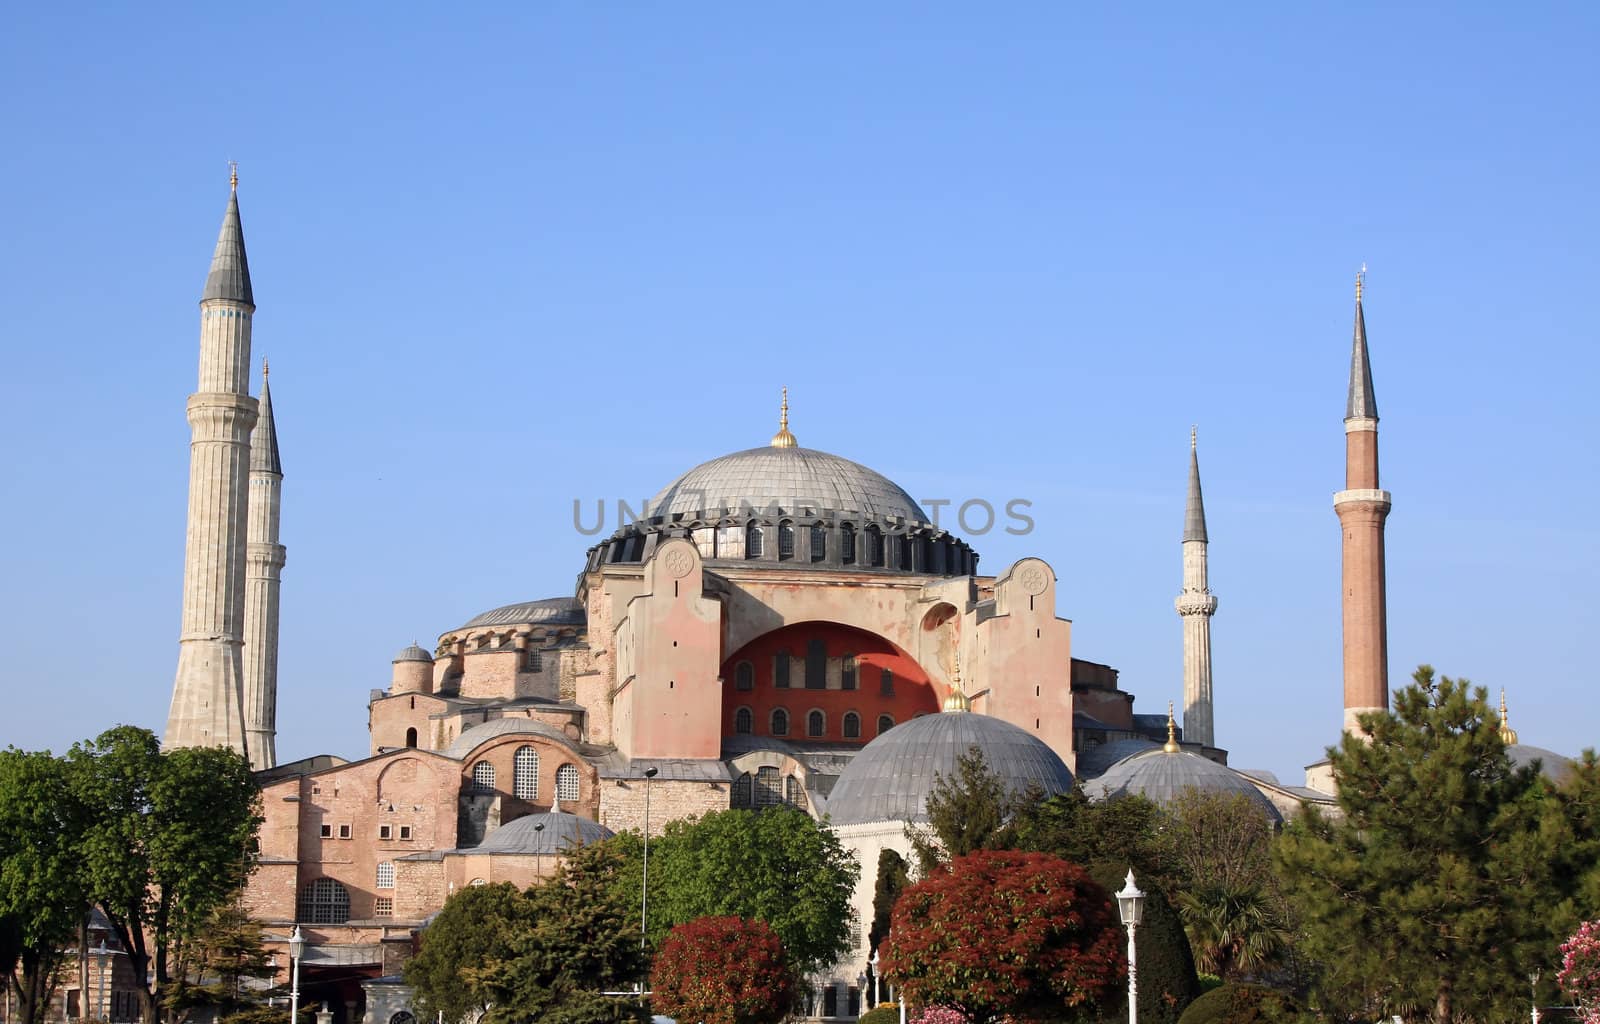 Famous Hagia Sophia church rebuild into mosque (istanbul, Turkey)